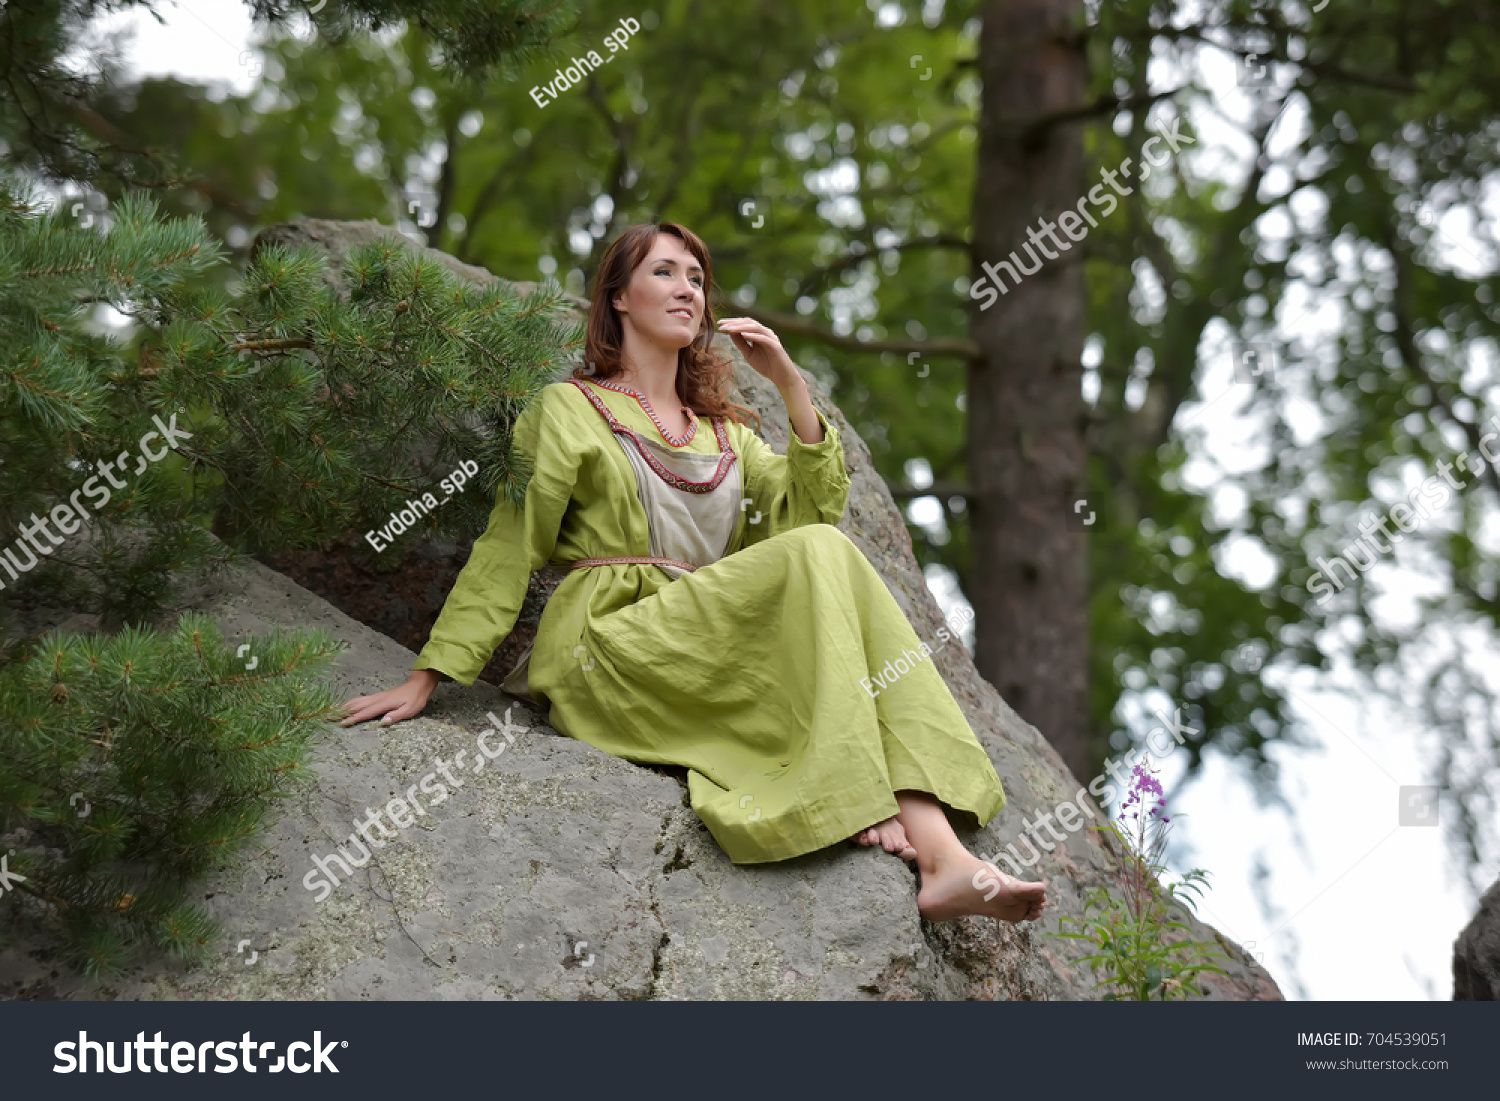 https://image.shutterstock.com/shutterstock/photos/704539051/display_1500/stock-photo-viking-girl-in-a-retro-dress-704539051.jpg